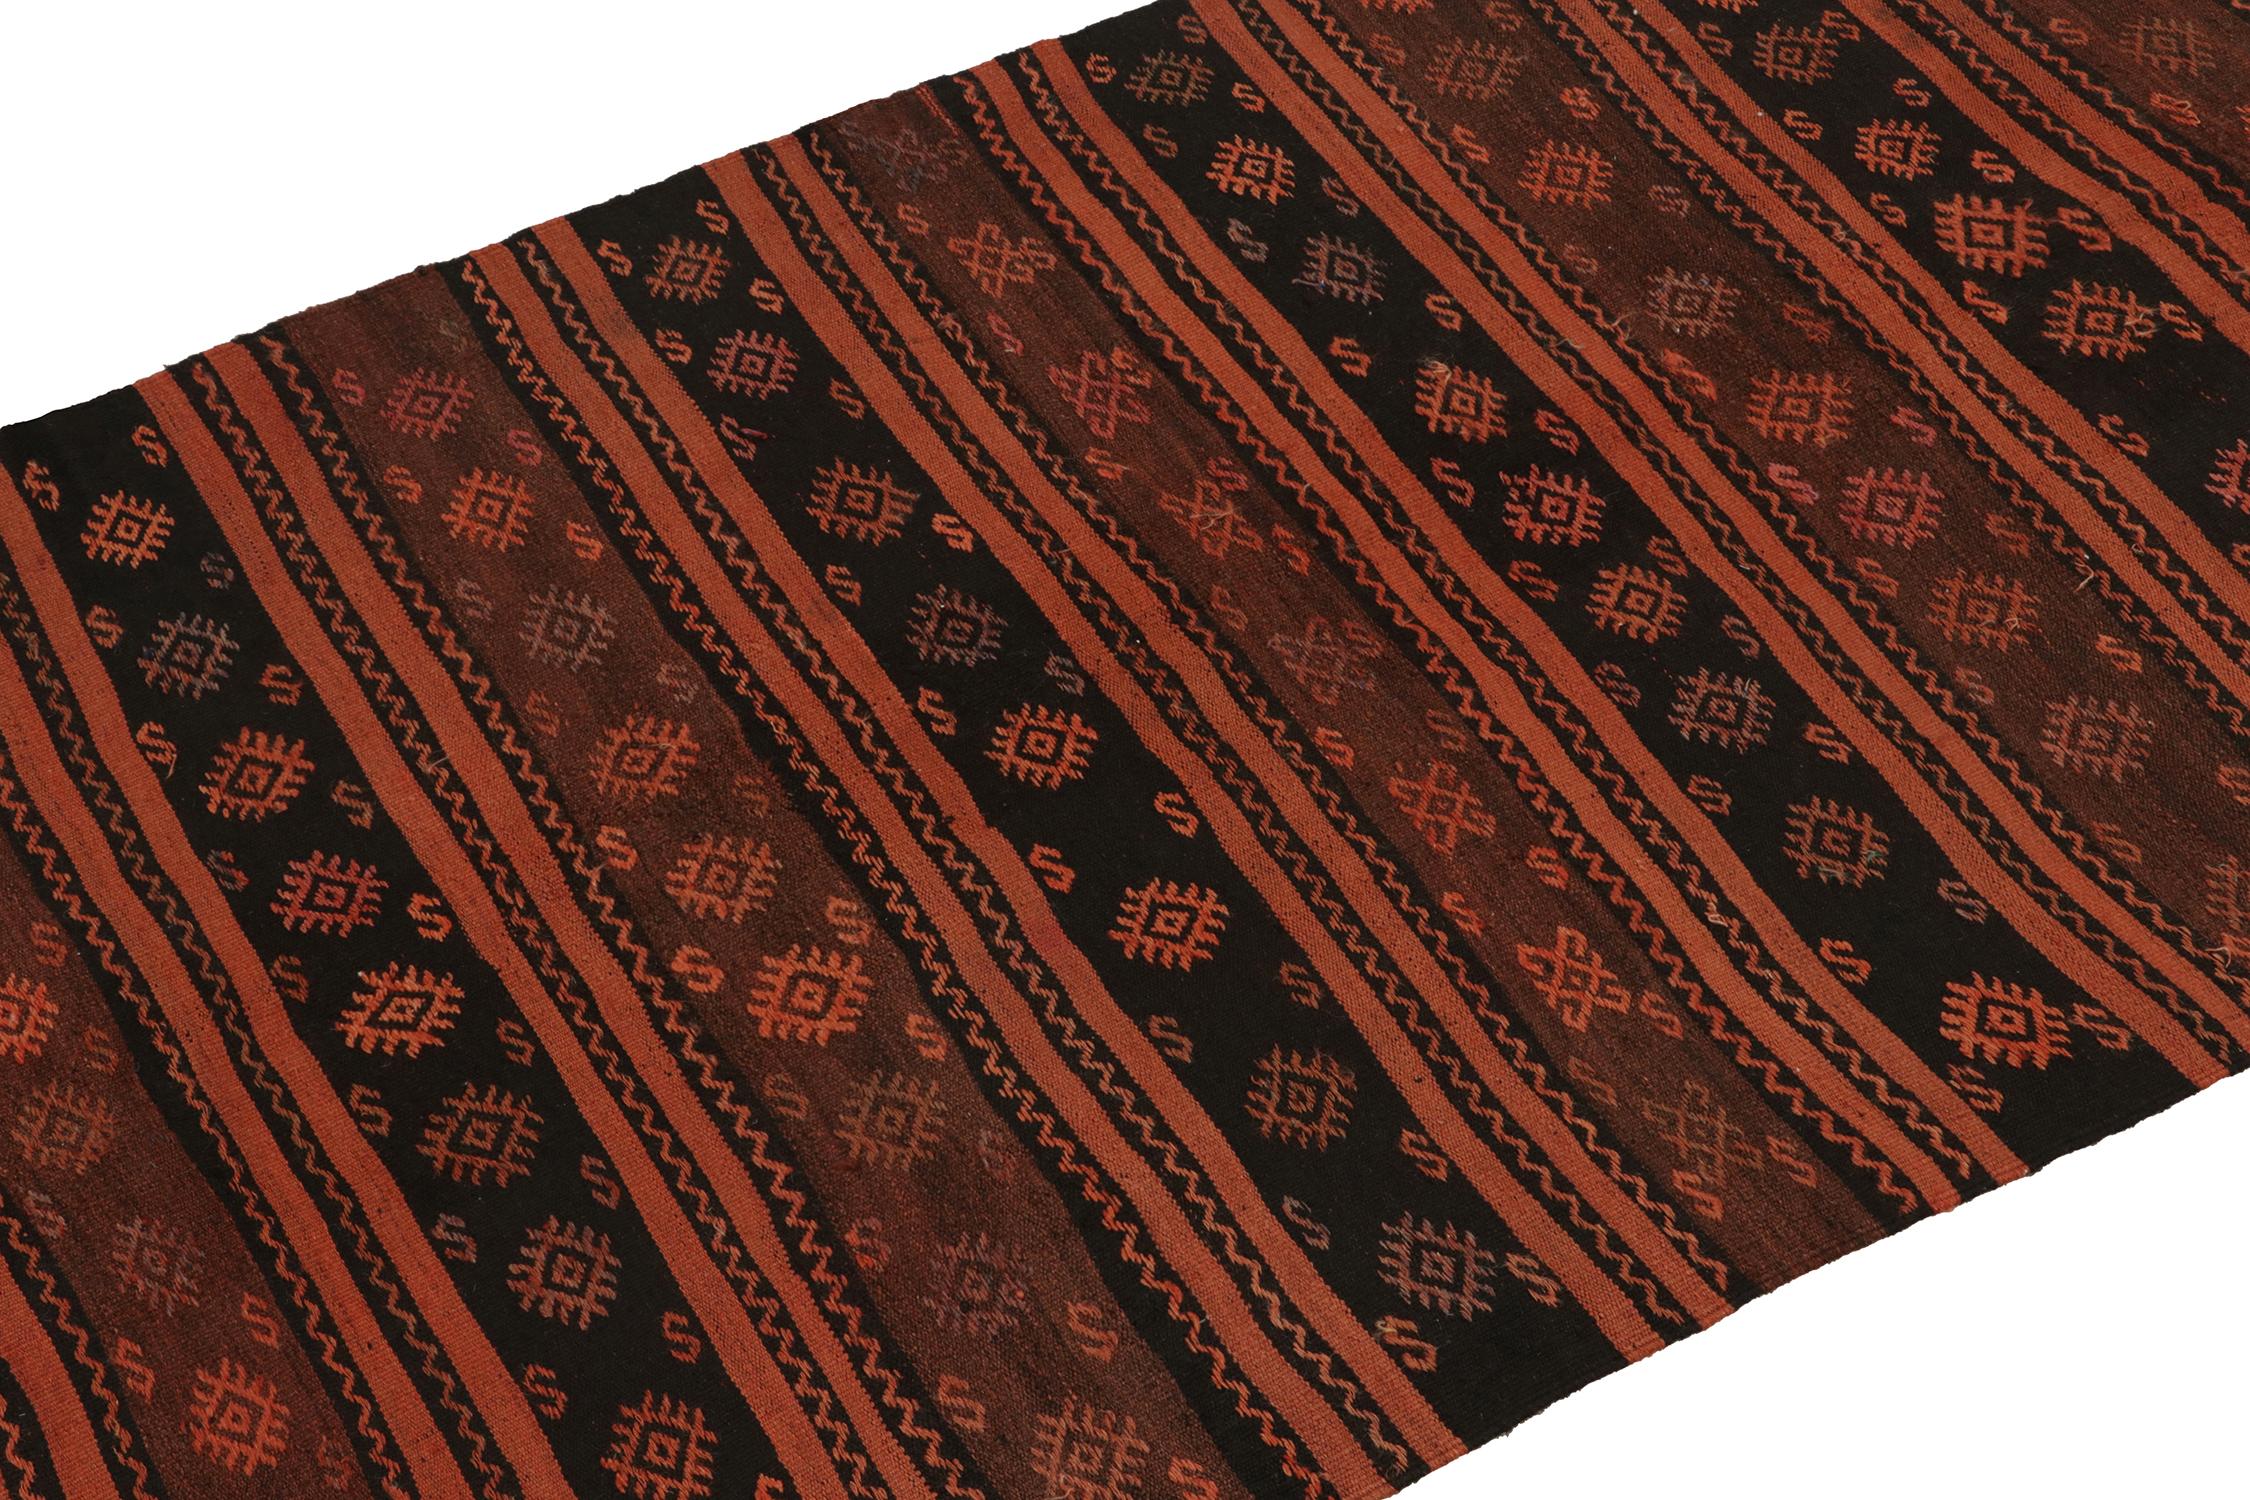 Turkish Vintage Gallery-Sized Kilim in Orange and Black Stripes Patterns by Rug & Kilim For Sale